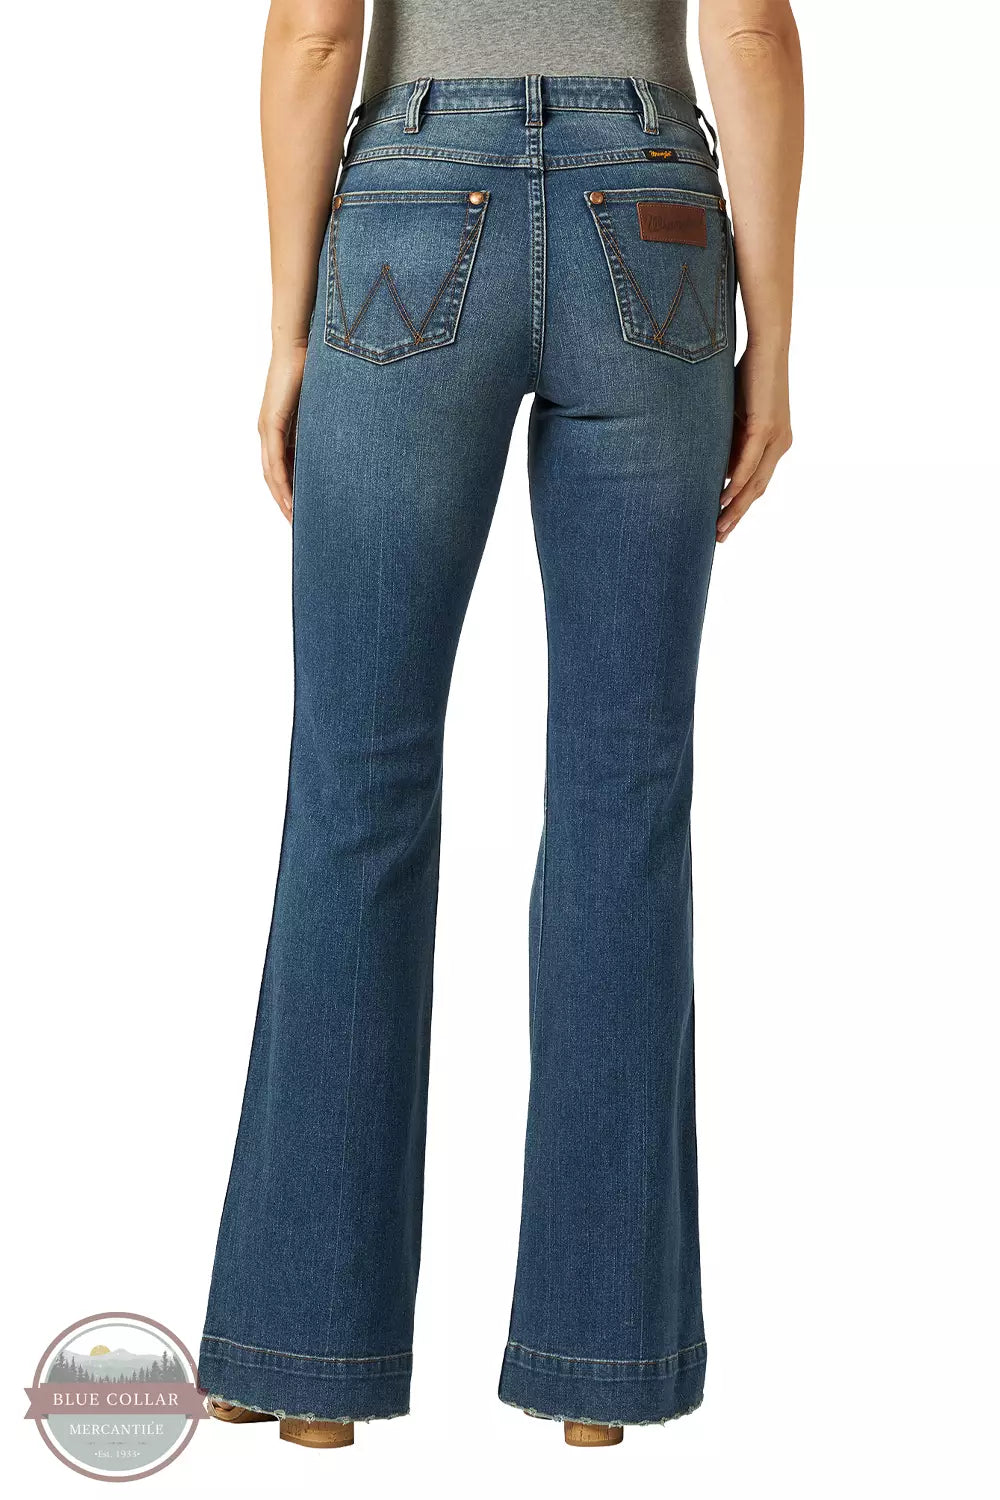 Wrangler 1011MPESY Retro Premium High Rise Slim Trouser Jeans in Shelby Back View